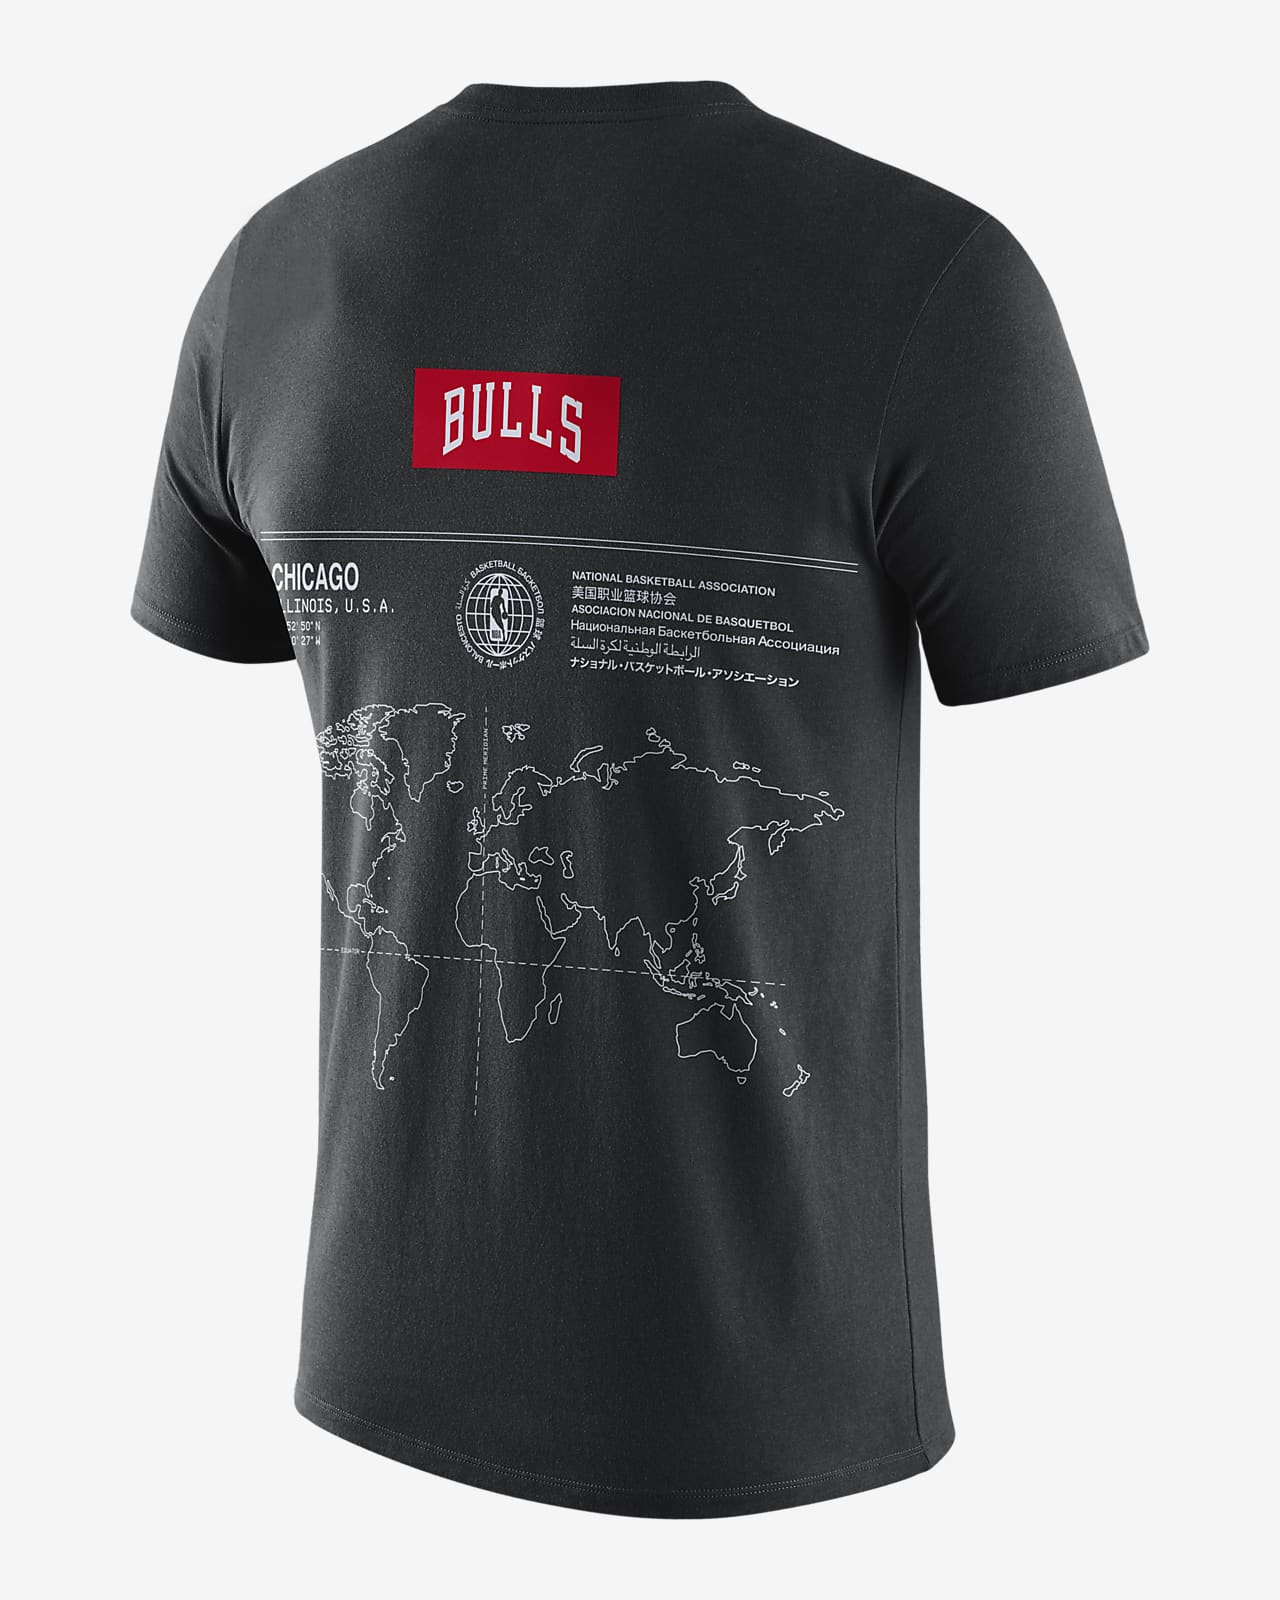 Bulls Courtside Men's Nike NBA T-Shirt 